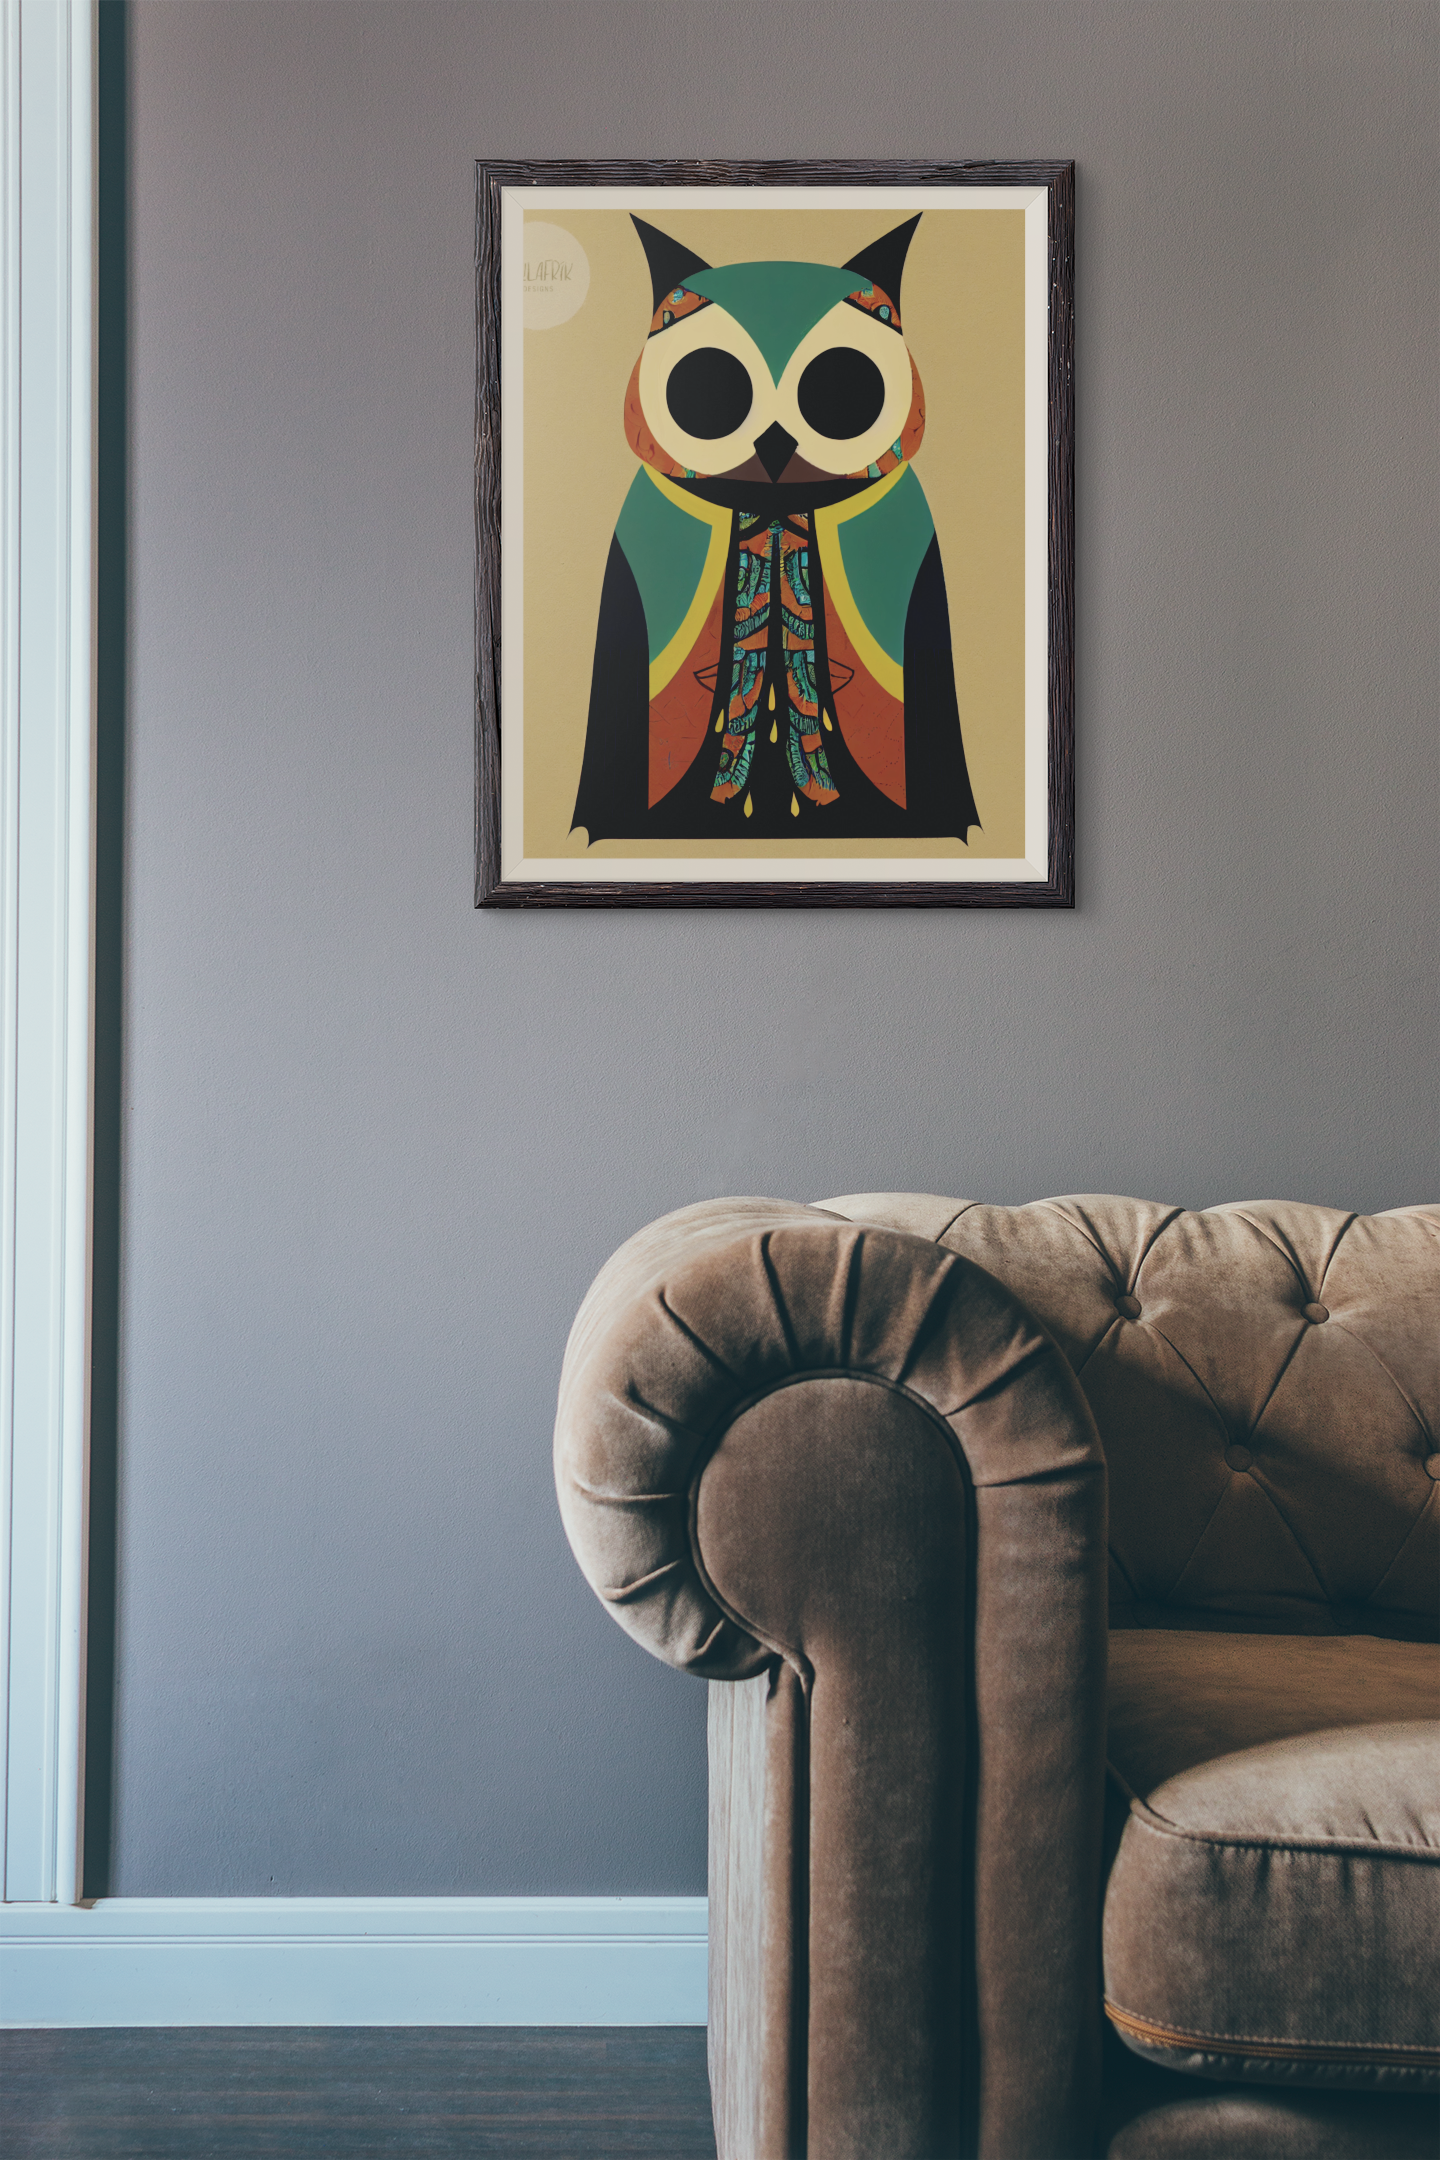 Ethnic Design: Royal Owl